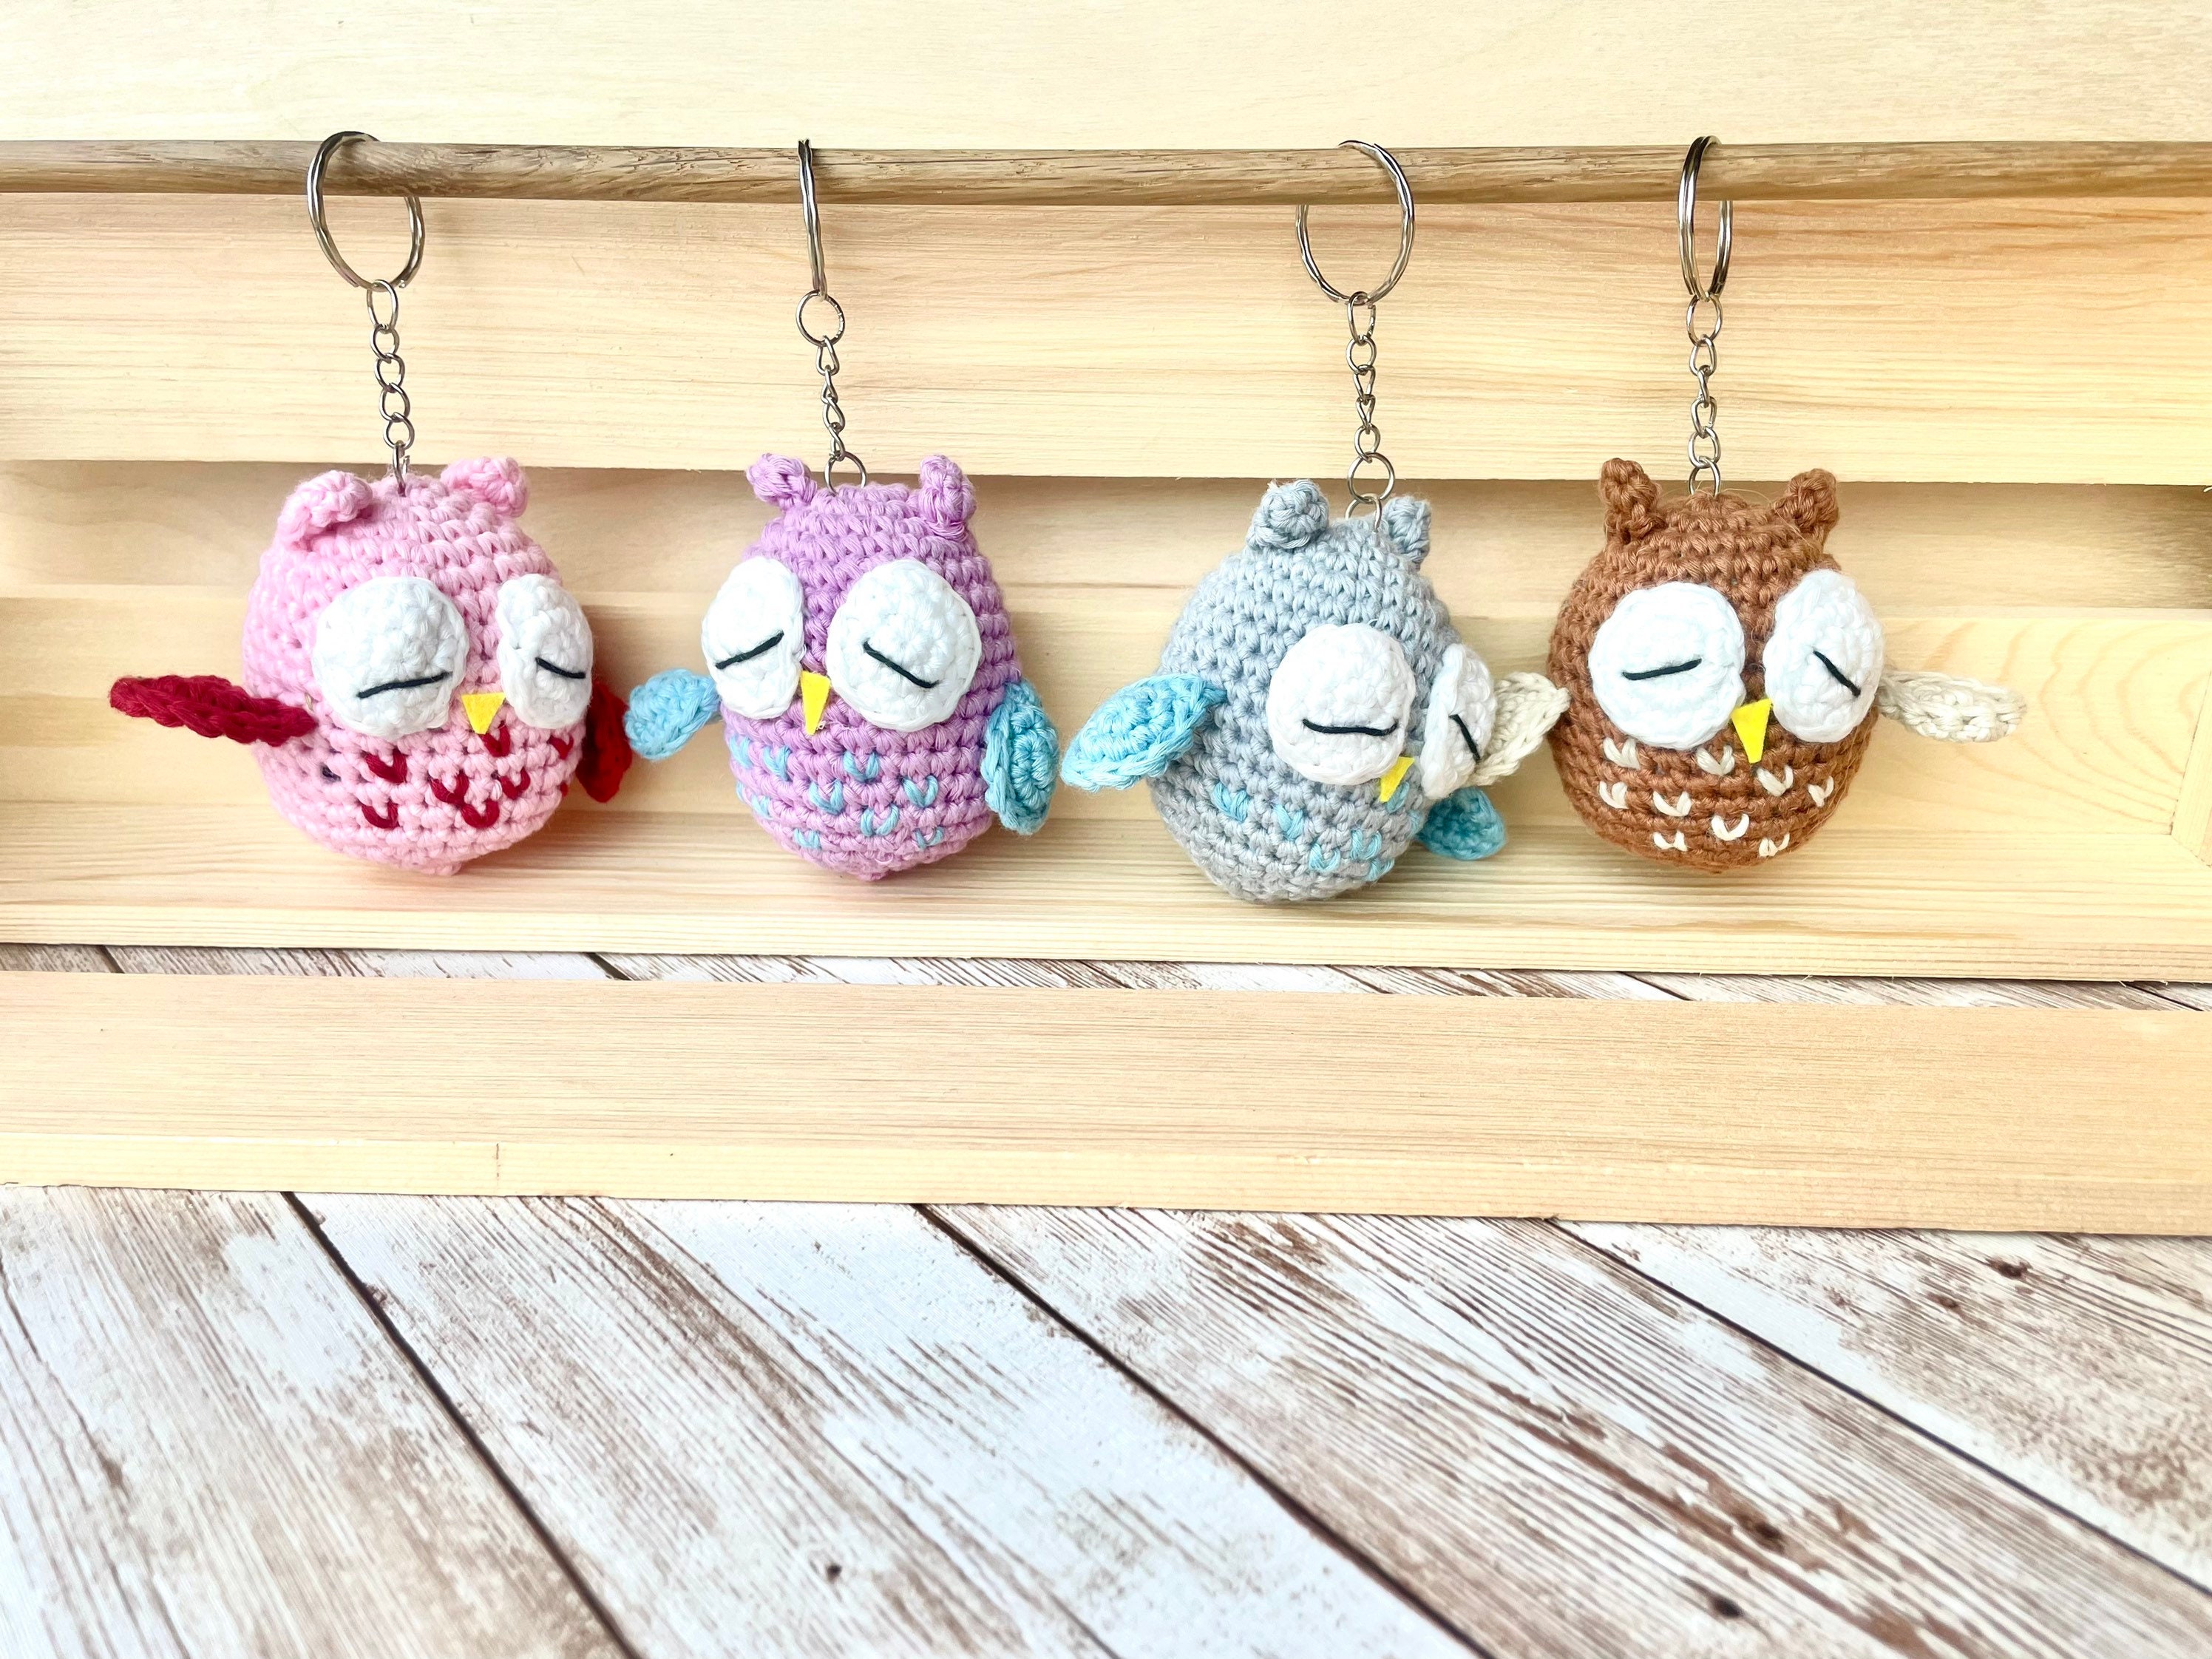 TheWarmCats Crochet Little Baby Owl Keychain Charm , Small Sleeping Owl Key Ring Gift Miniature Crochet Toy Woodland Bird